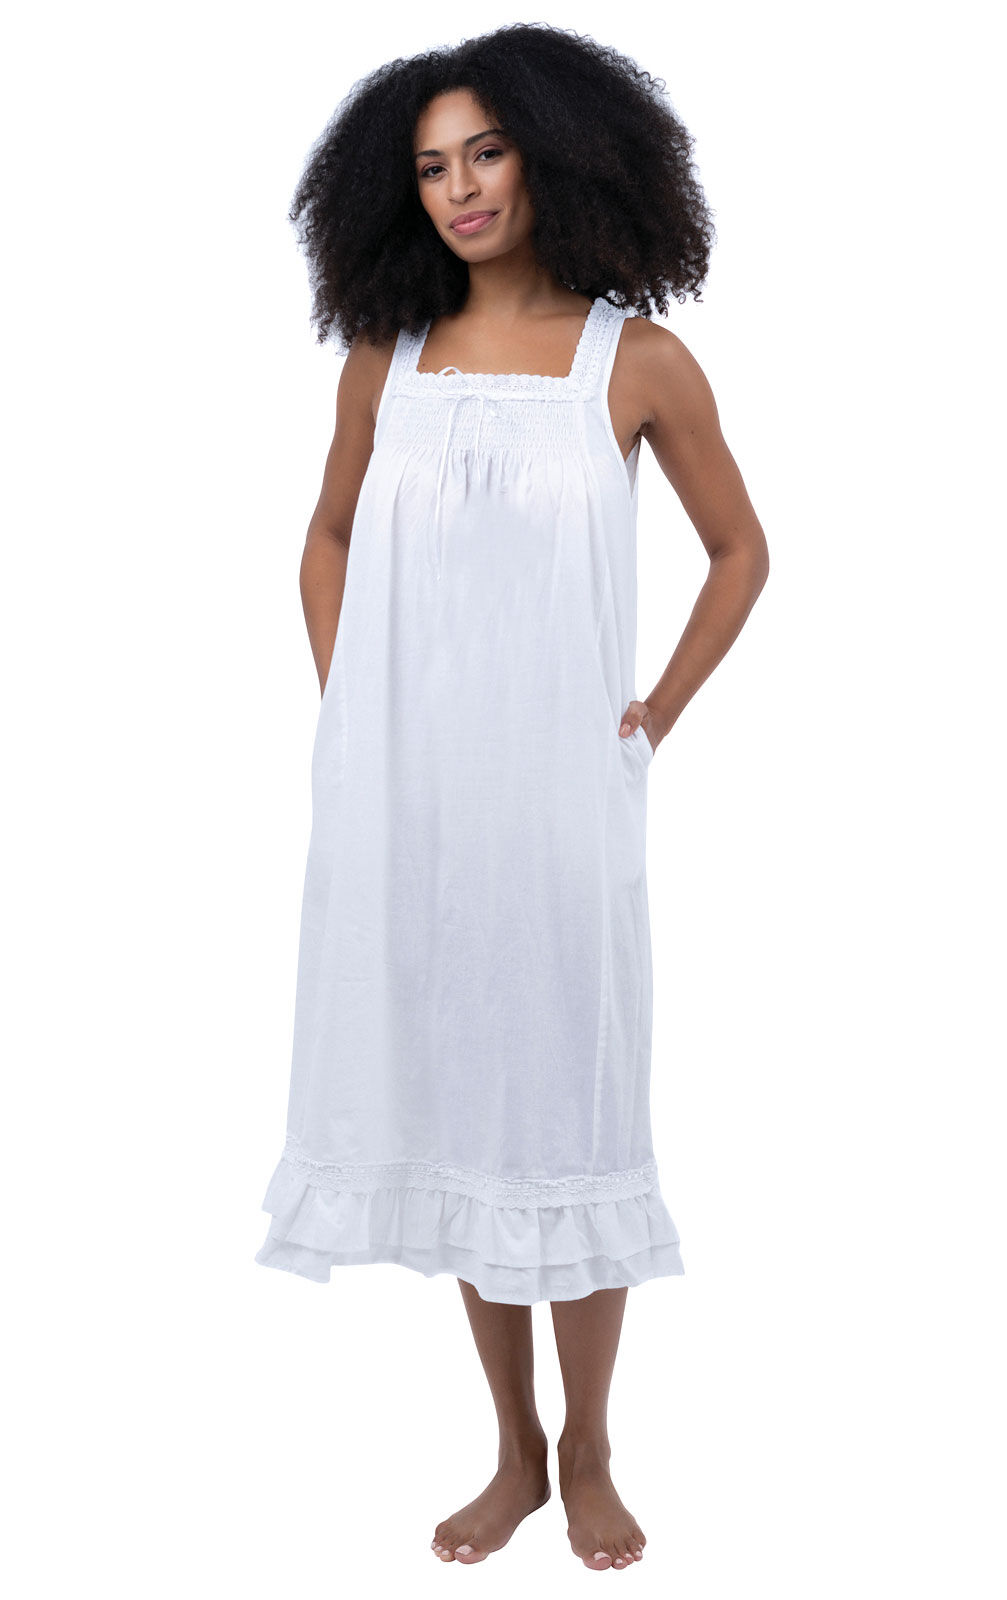 XXL The 1 for U 100% Cotton Ladies Victorian Style Nightgown 7 Sizes Kate